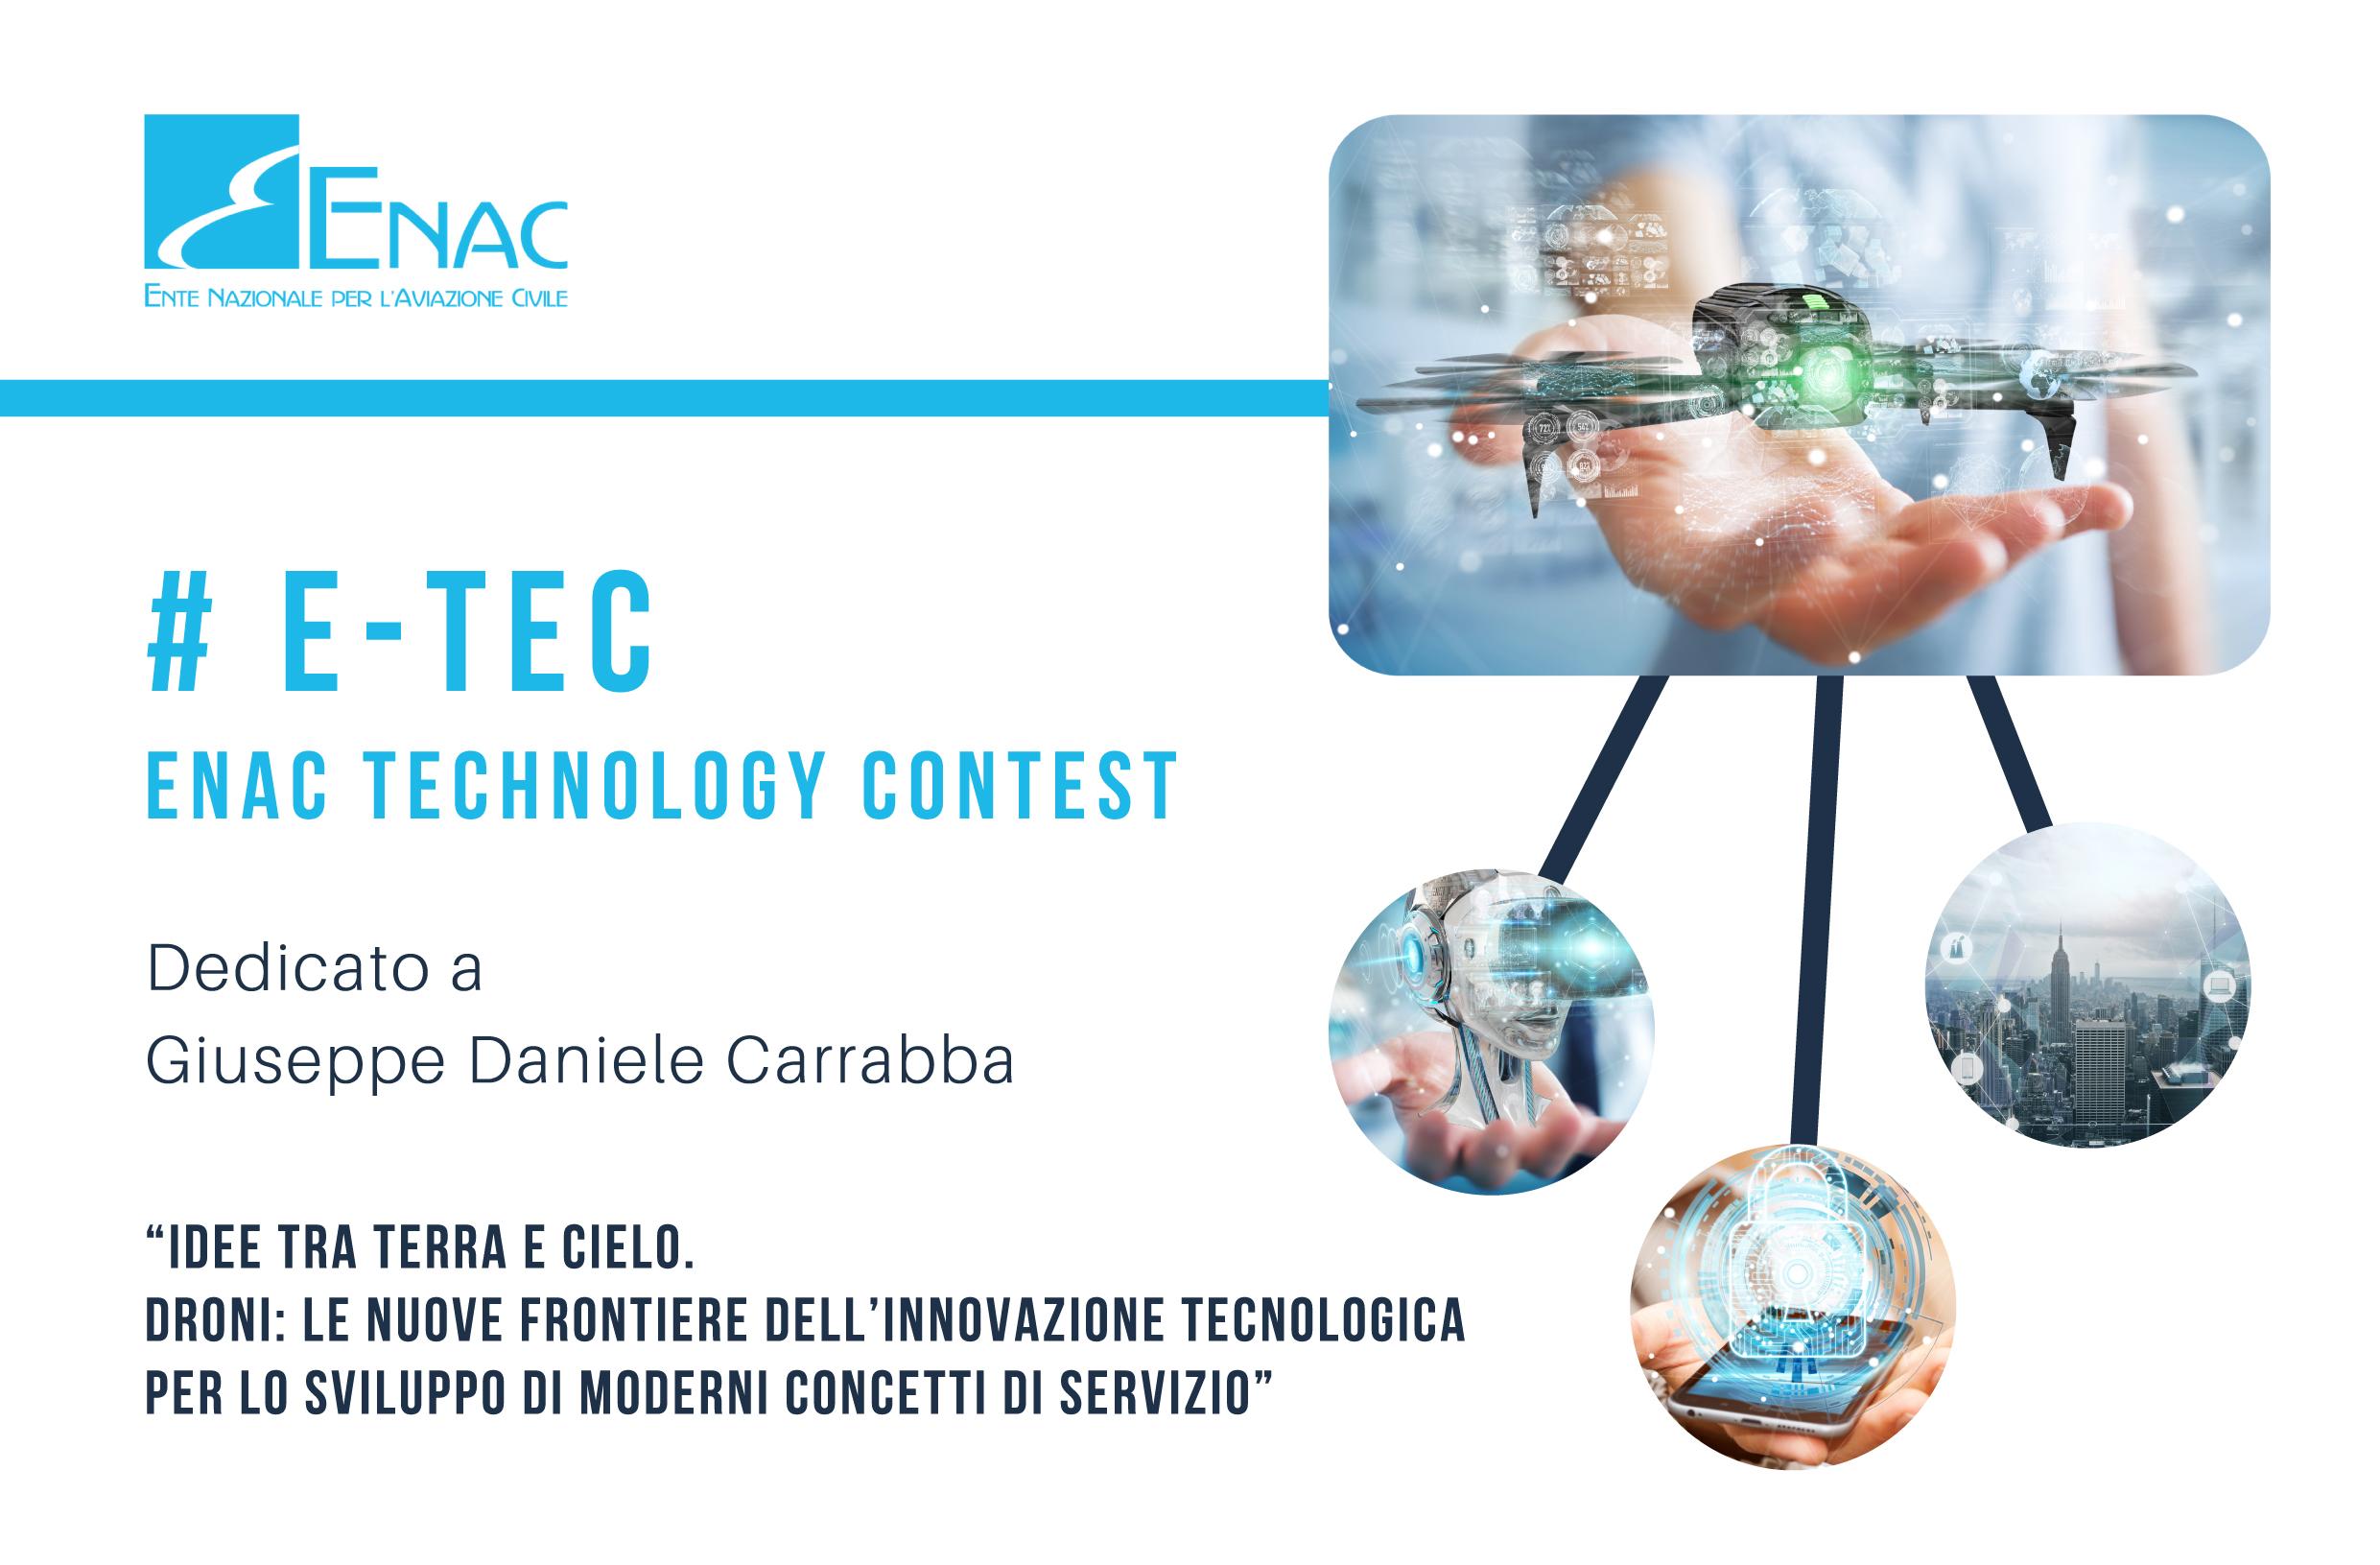 #E-TeC (ENAC Technology Contest)